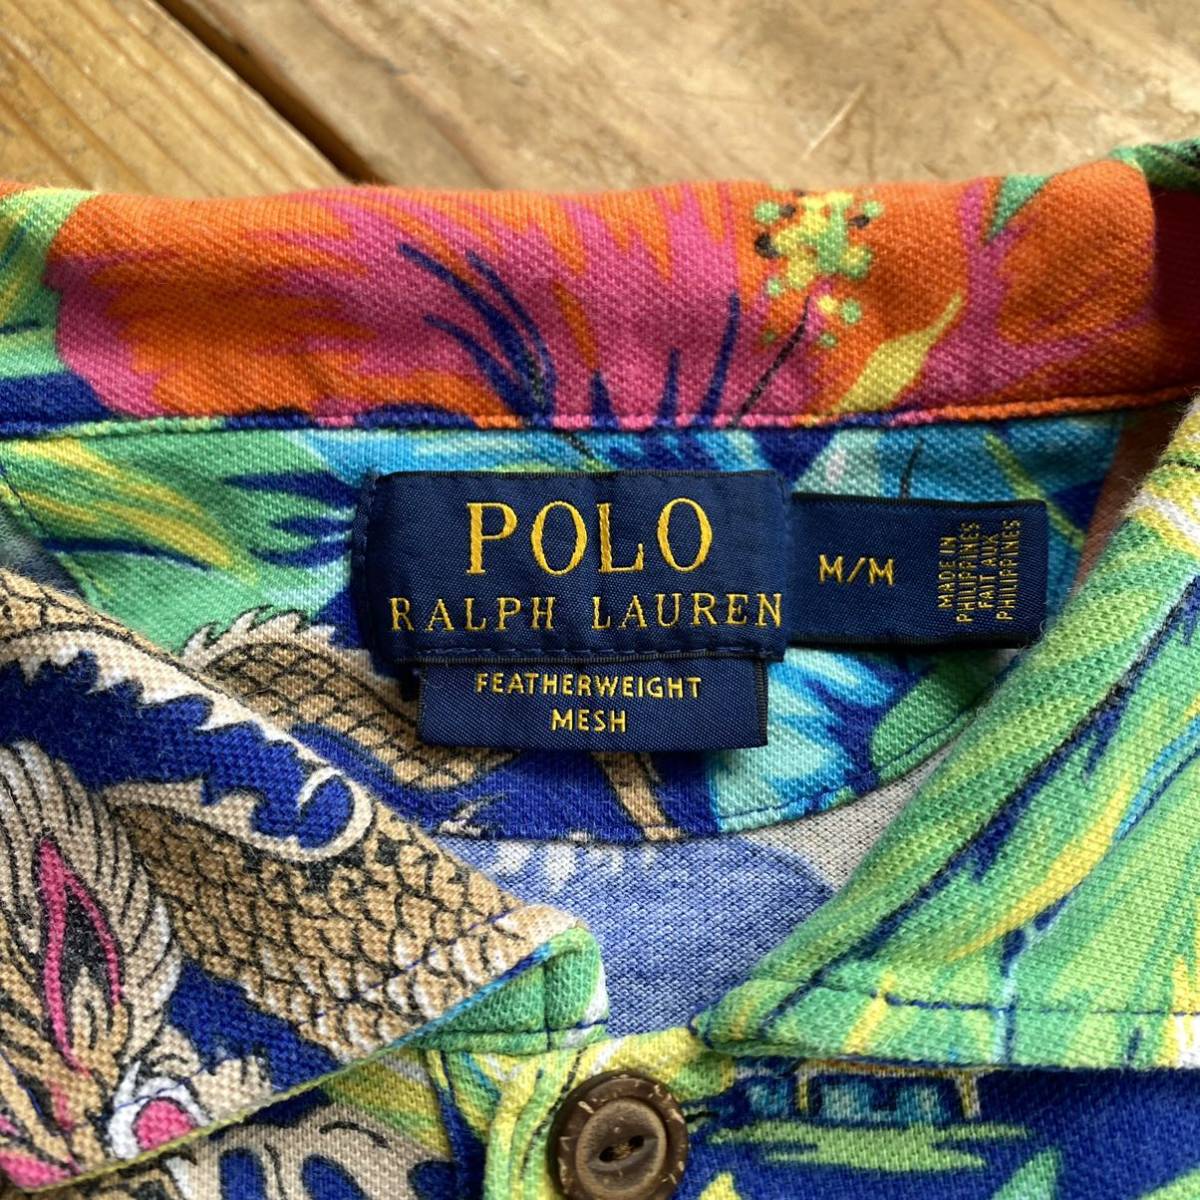 USA б/у одежда POLO RALPH LAUREN Polo Ralph Lauren рубашка-поло короткий рукав мужской M размер карман общий рисунок botanikaru дракон Dragon American Casual T1896